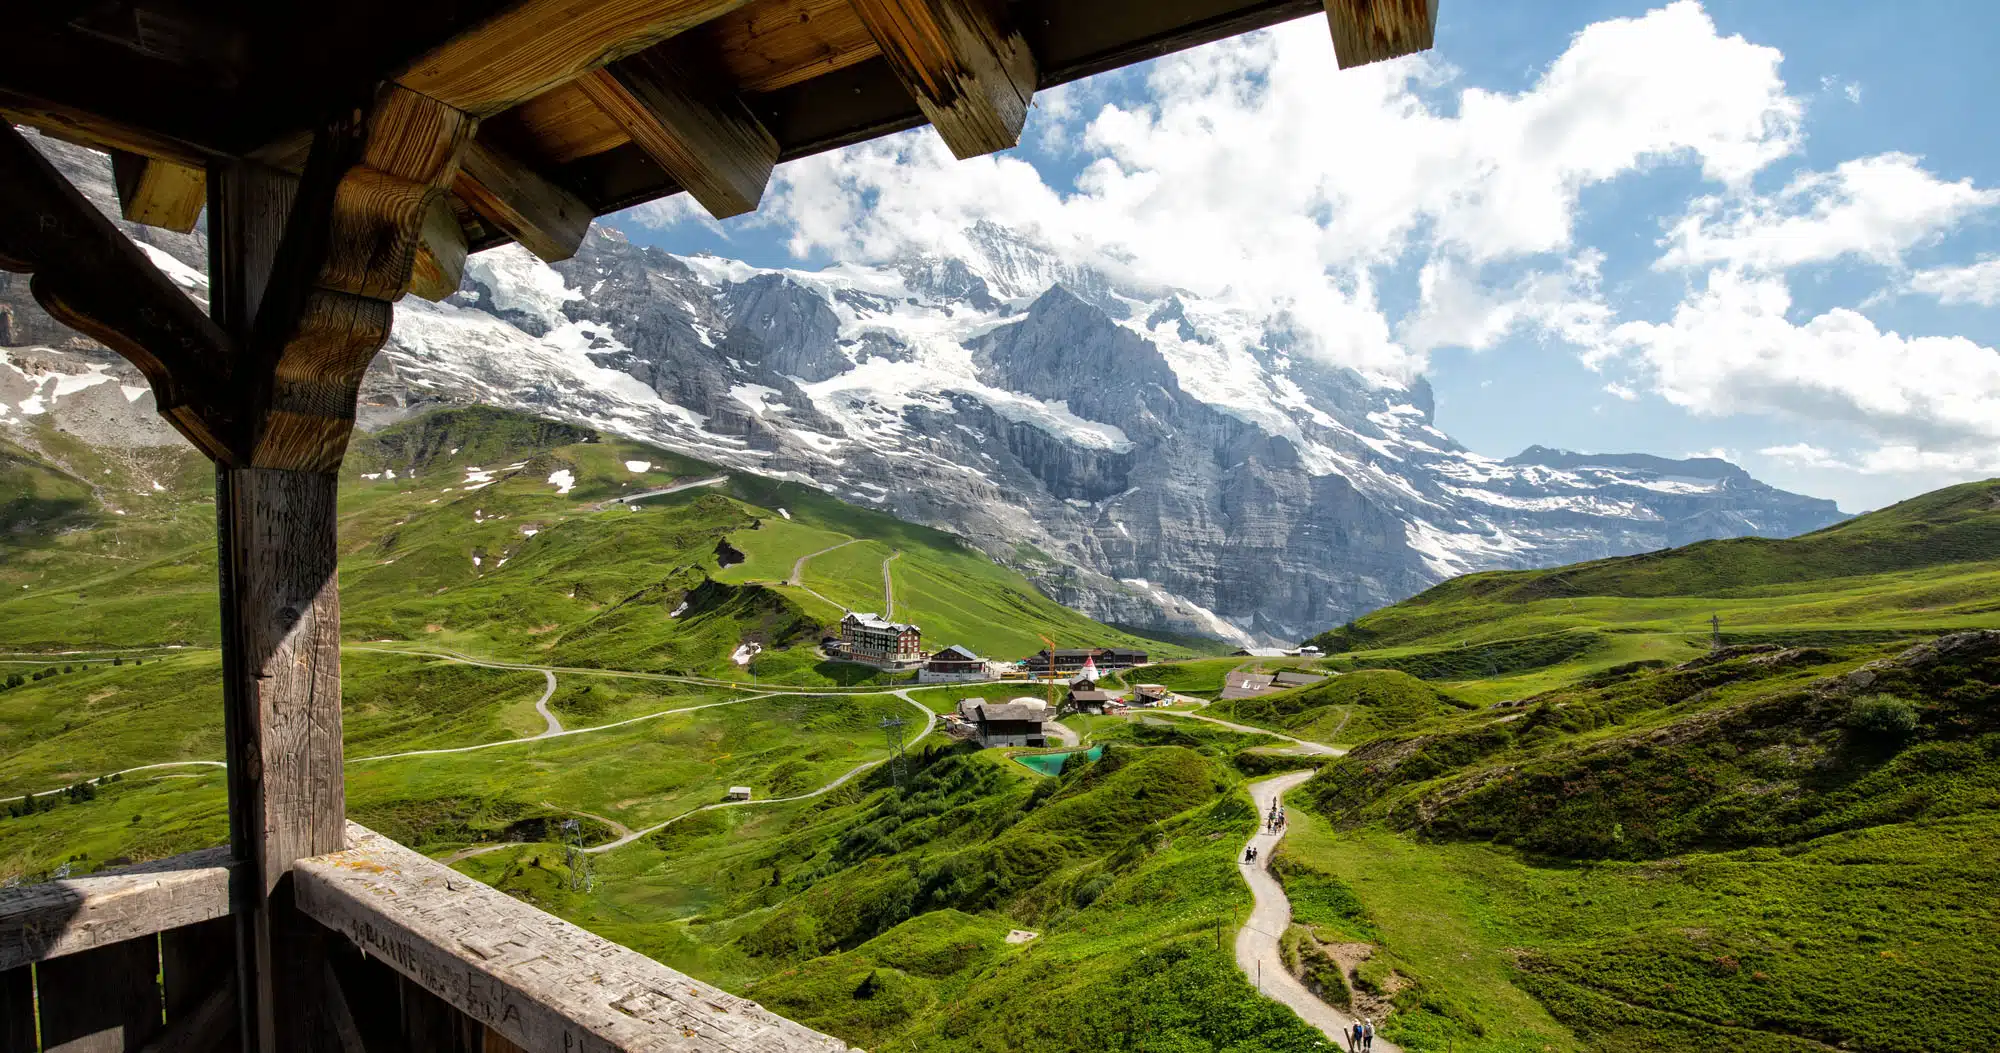 Featured image for “Jungfrau Itinerary: 1 to 7 Days in Murren, Lauterbrunnen, Jungfraujoch & Interlaken”